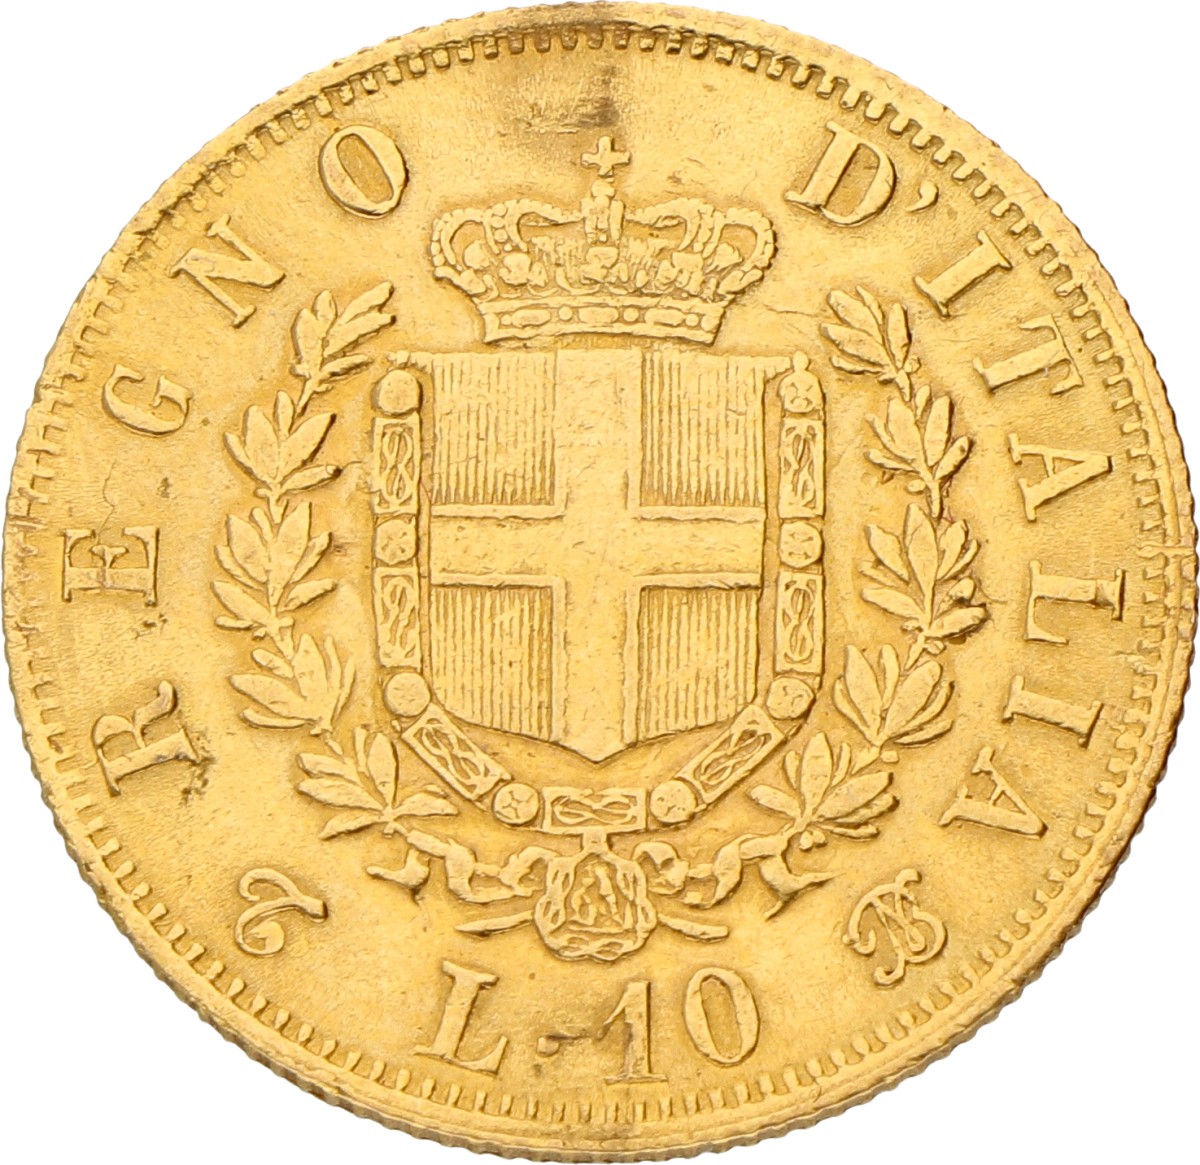 Italy. Kingdom. Vittorio Emanuele. 10 Lire. 1863. VF -.